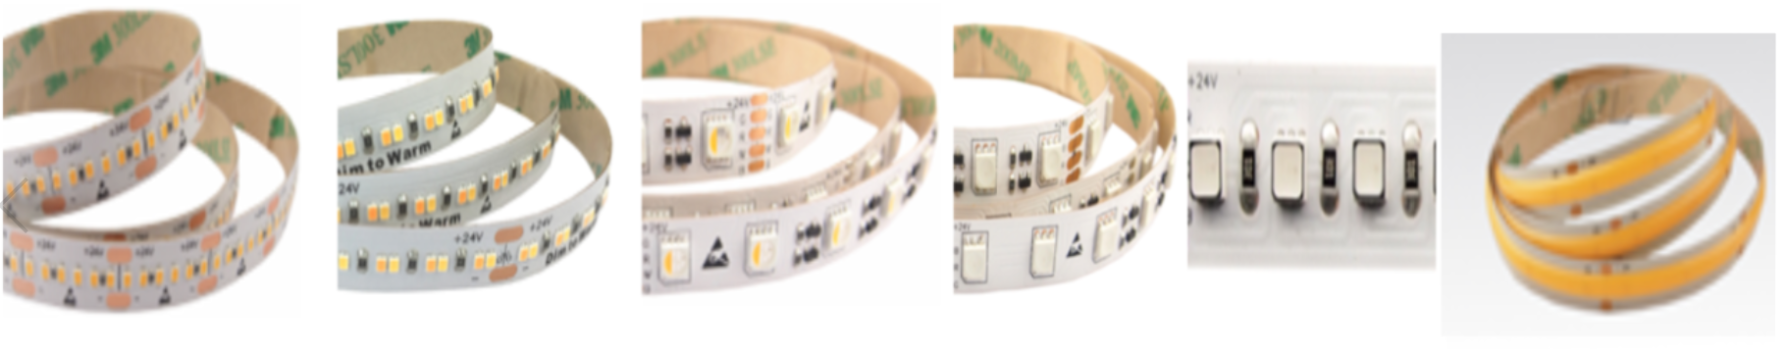 LED Tapes – Strips3